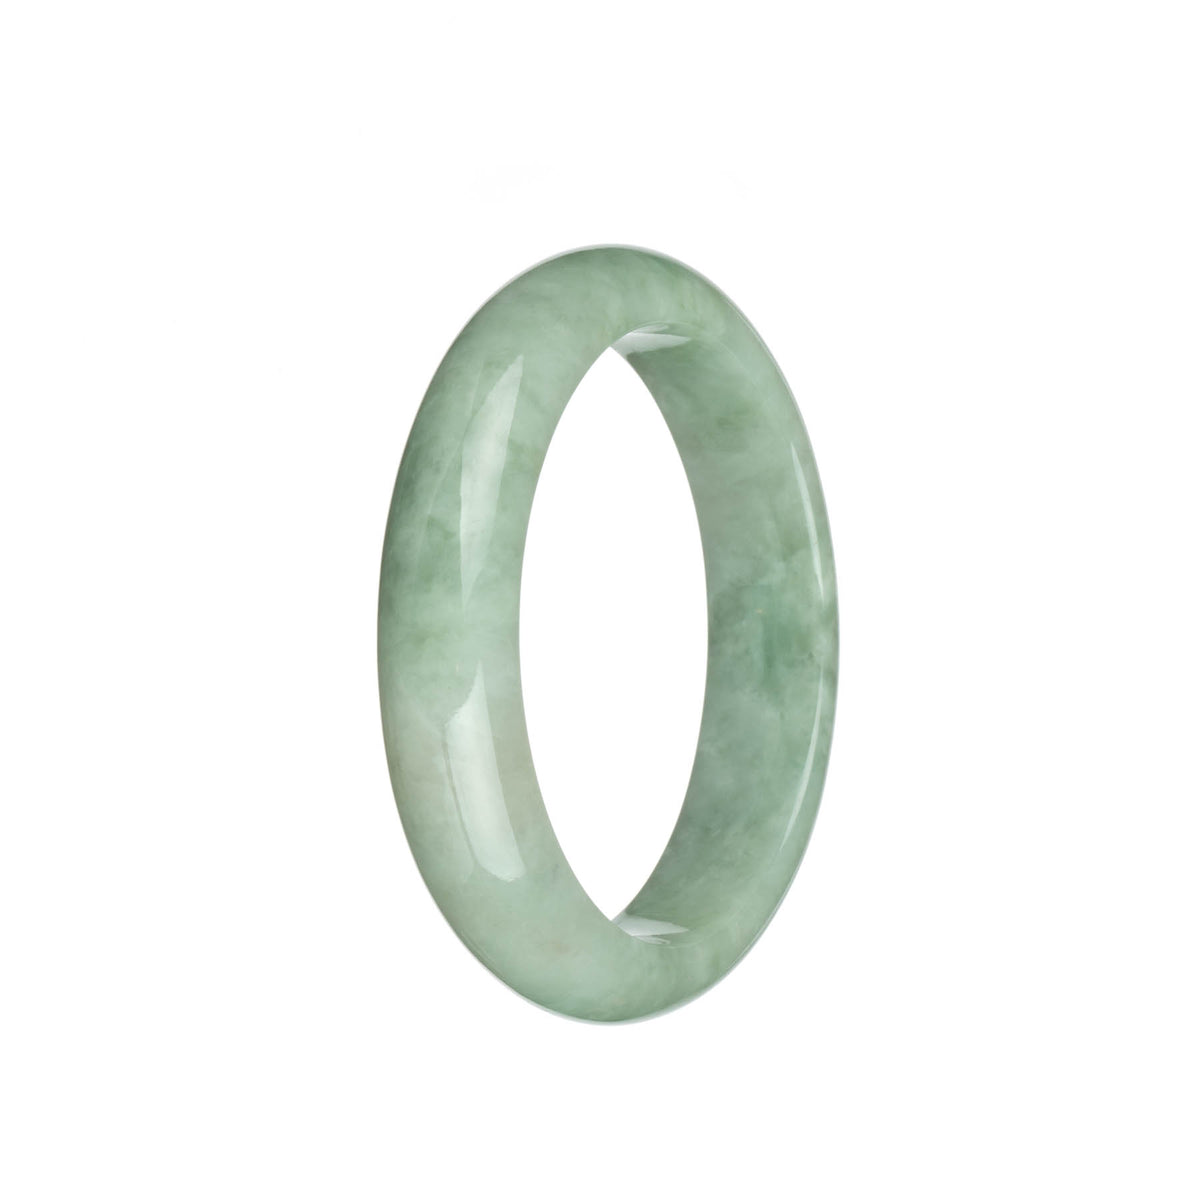 Genuine Natural Light Green and White Jade Bangle Bracelet - 59mm Half Moon